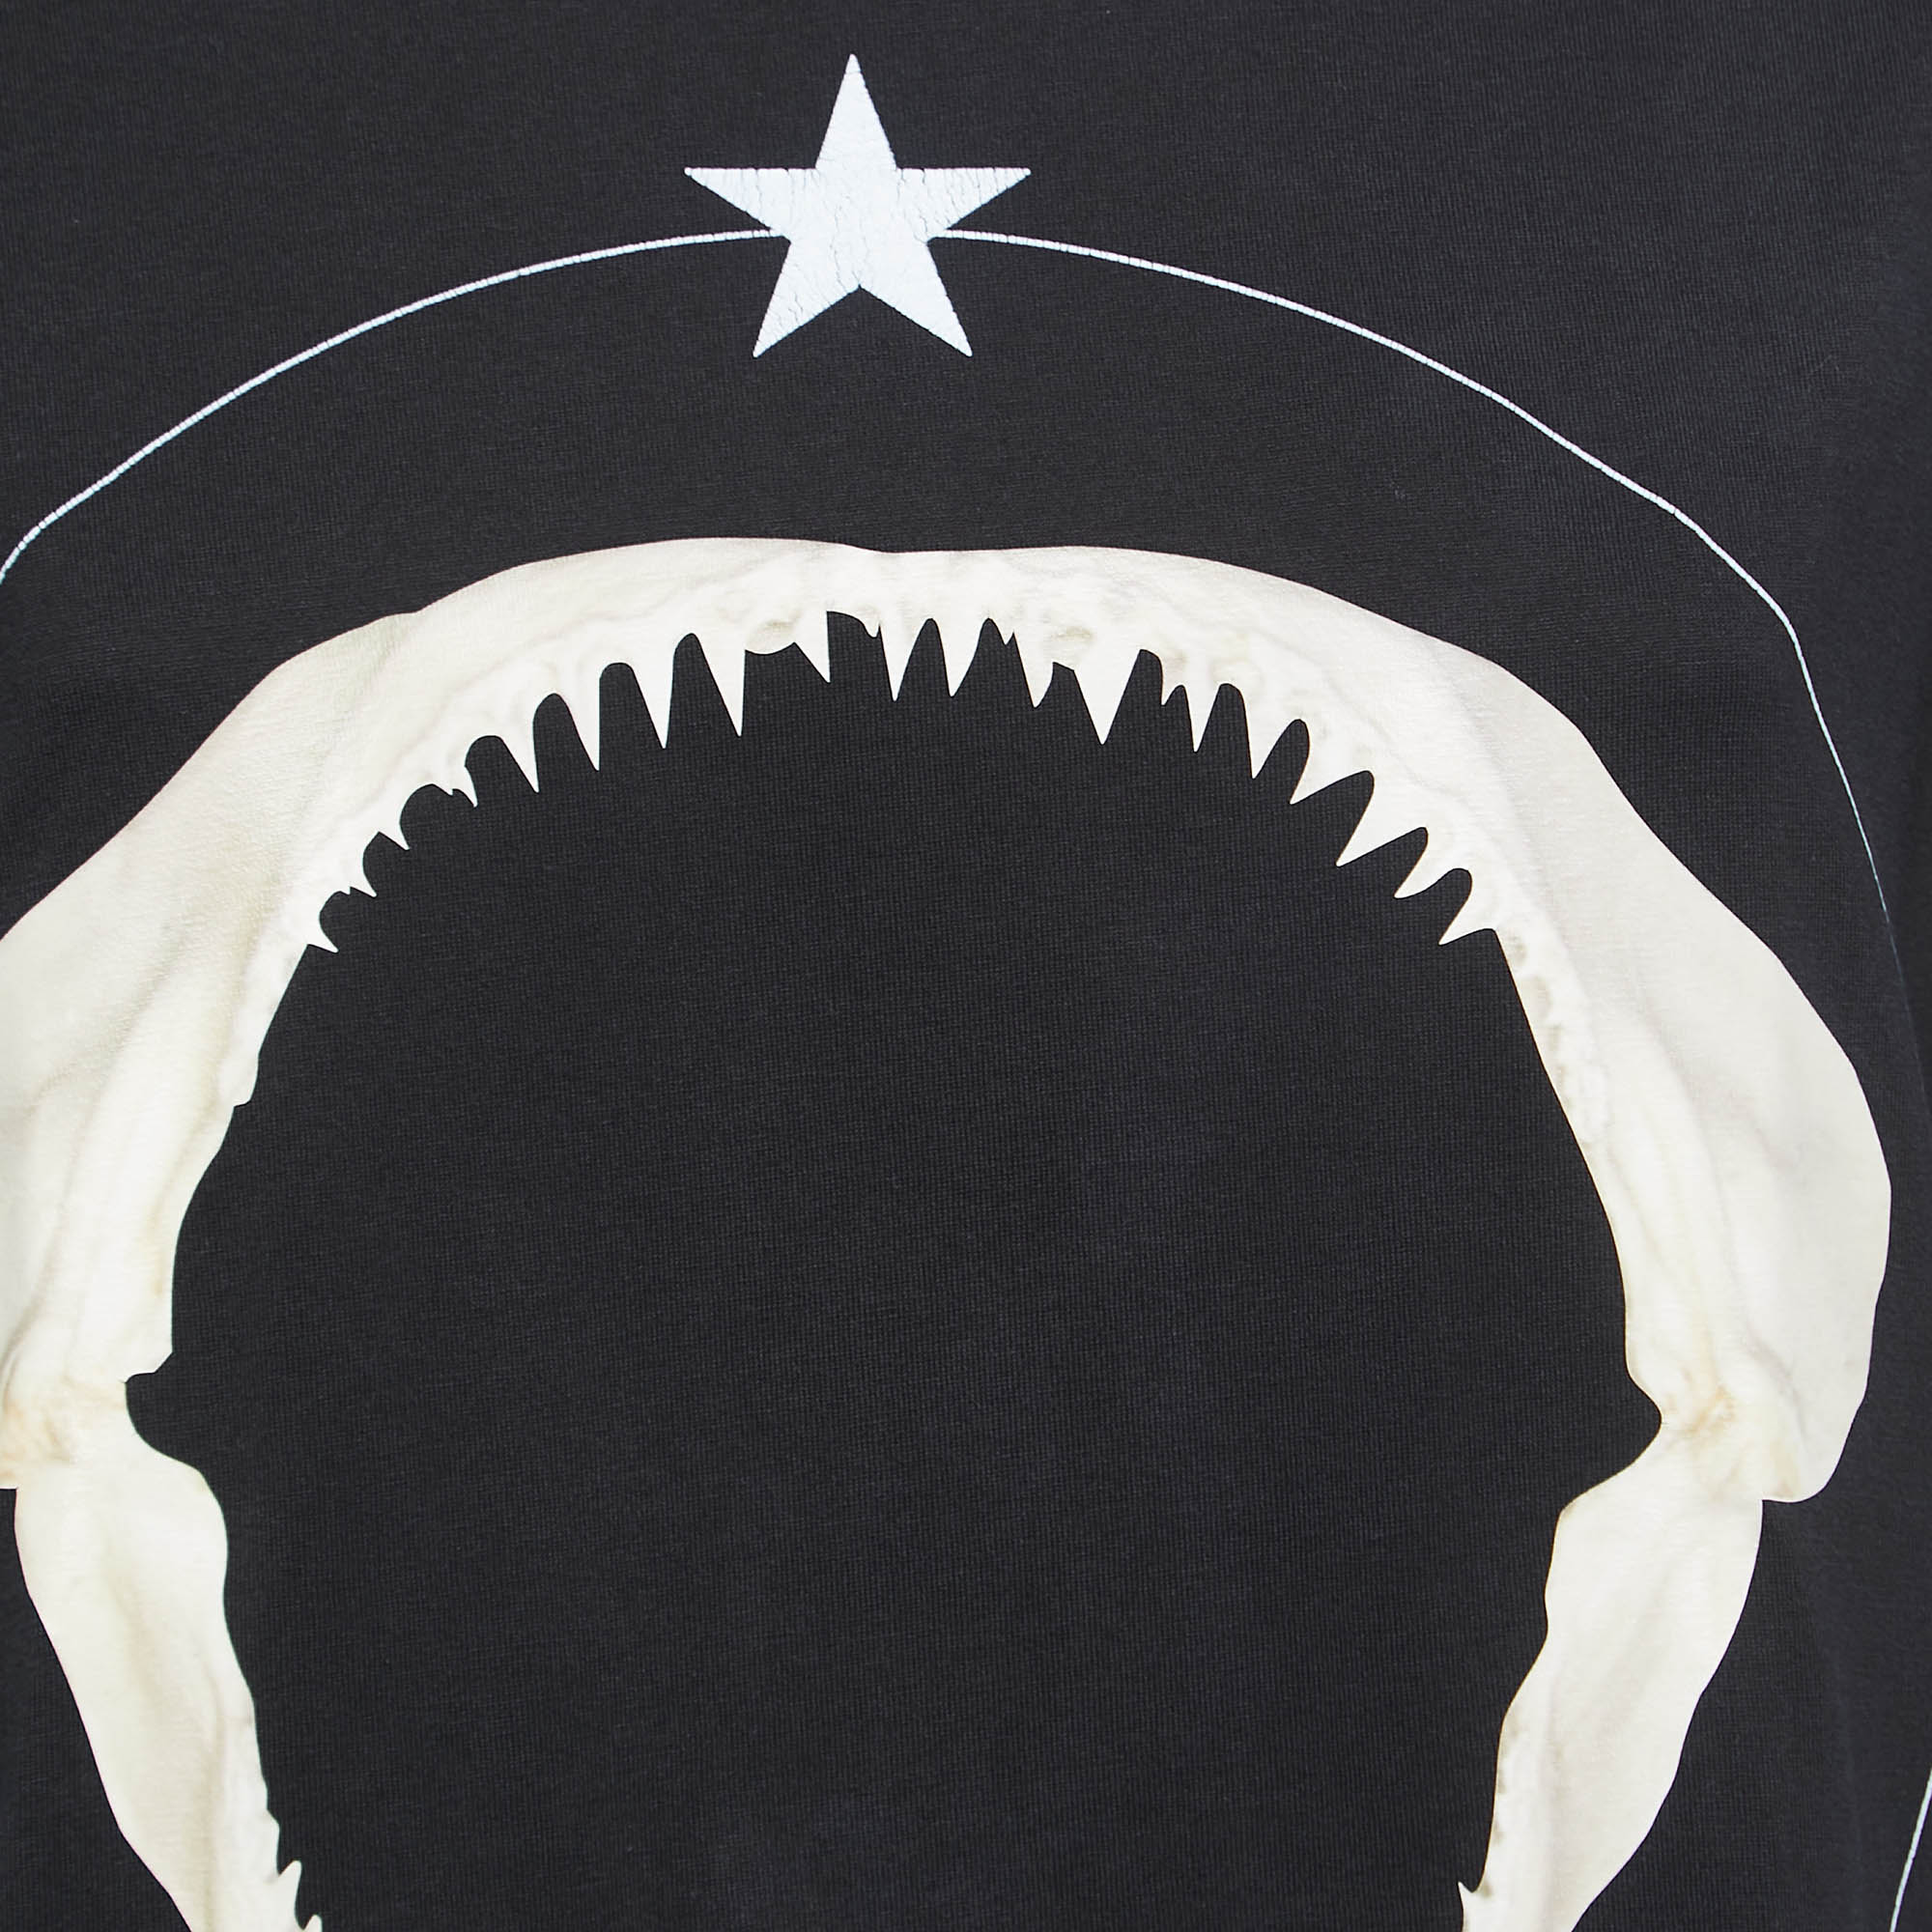 Givenchy Black Shark Jaw Print Cotton Crew Neck Half Sleeve T-shirt XXL